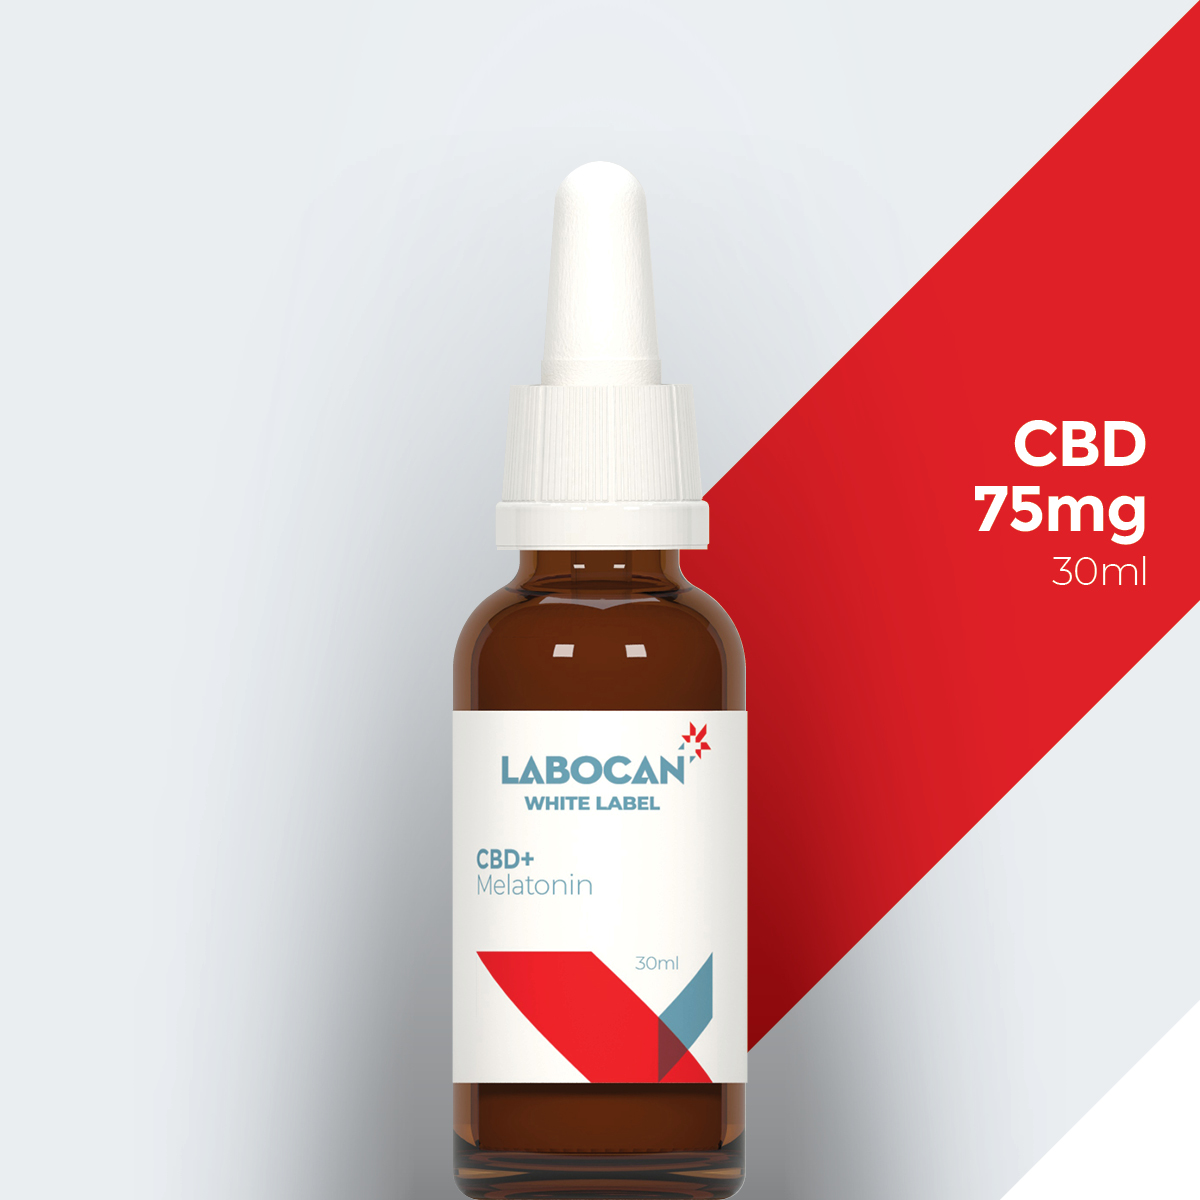 Labocan White Label CBD with Melatonin